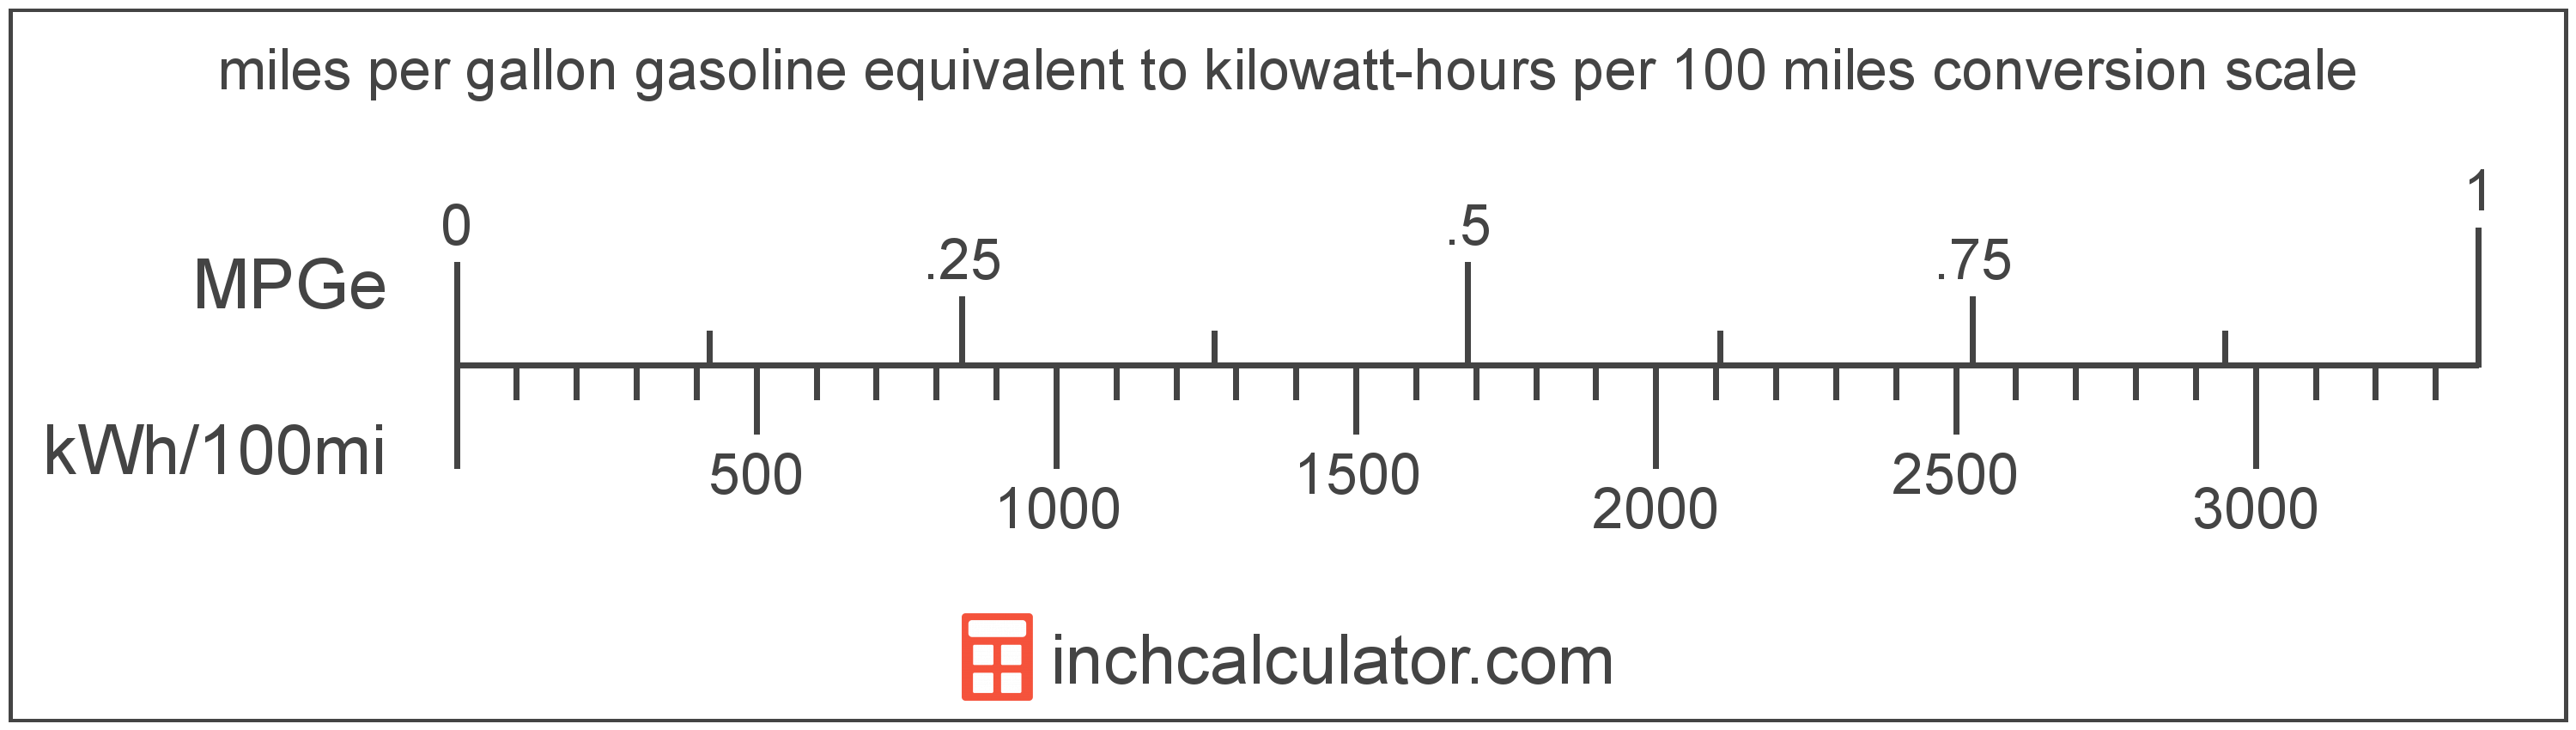 conversion scale showing kilowatt-hours per 100 miles and equivalent miles per gallon gasoline equivalent electric car efficiency values